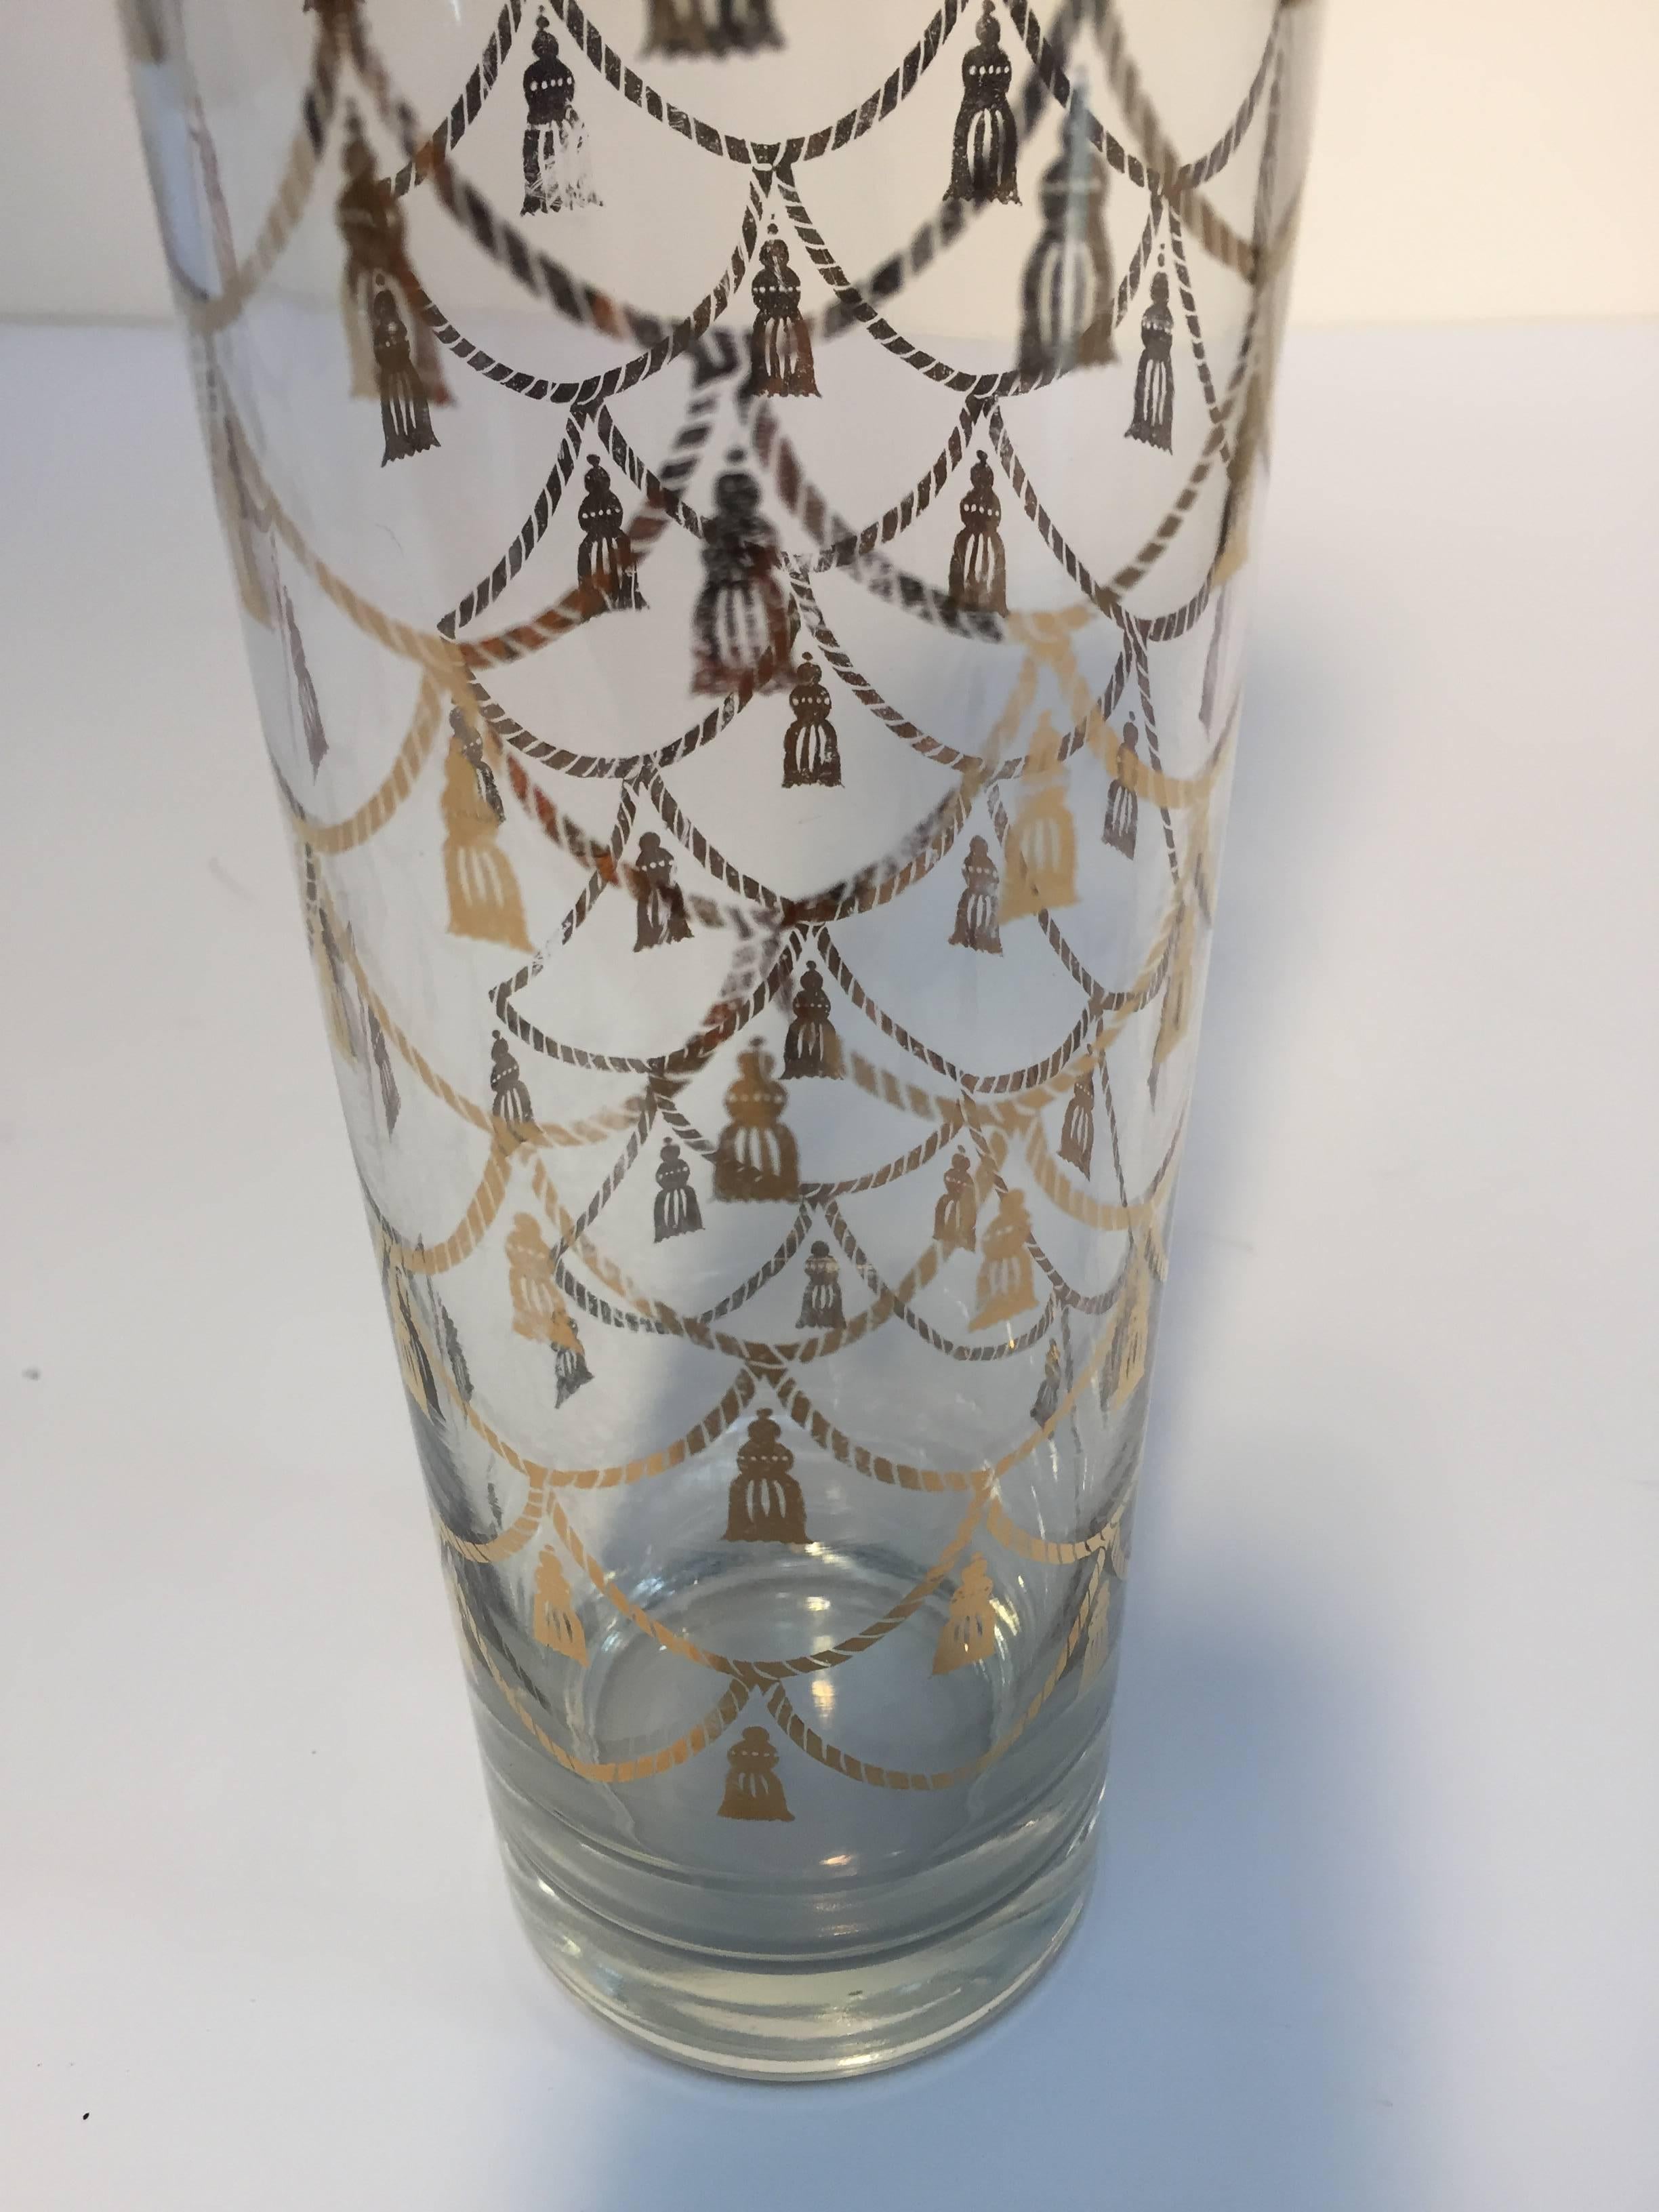 Hand-Painted Vintage Culver Cocktail Set of Barware Glasses and Cocktail Shaker 22 Karat Gold